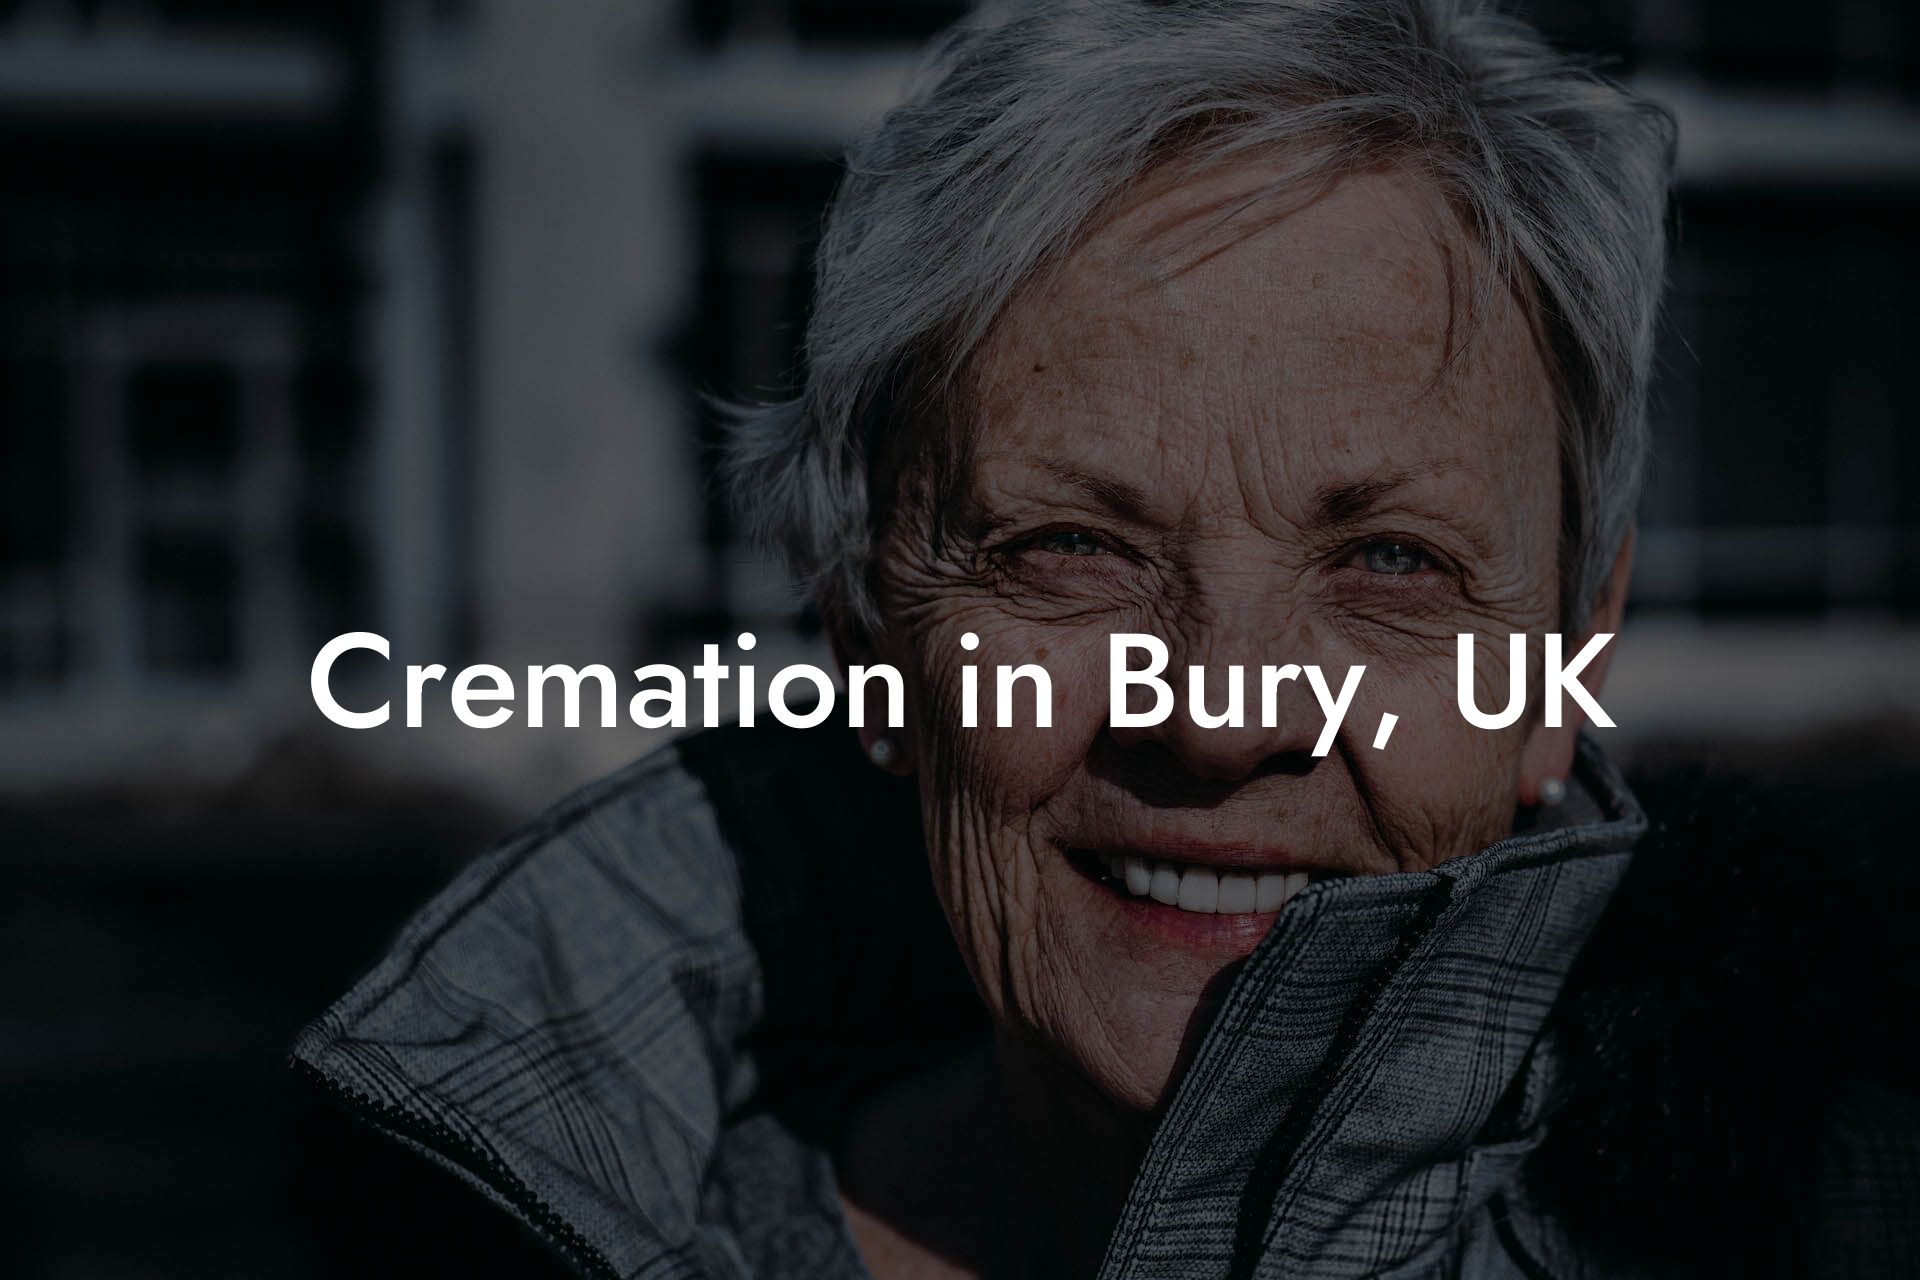 Cremation in Bury, UK